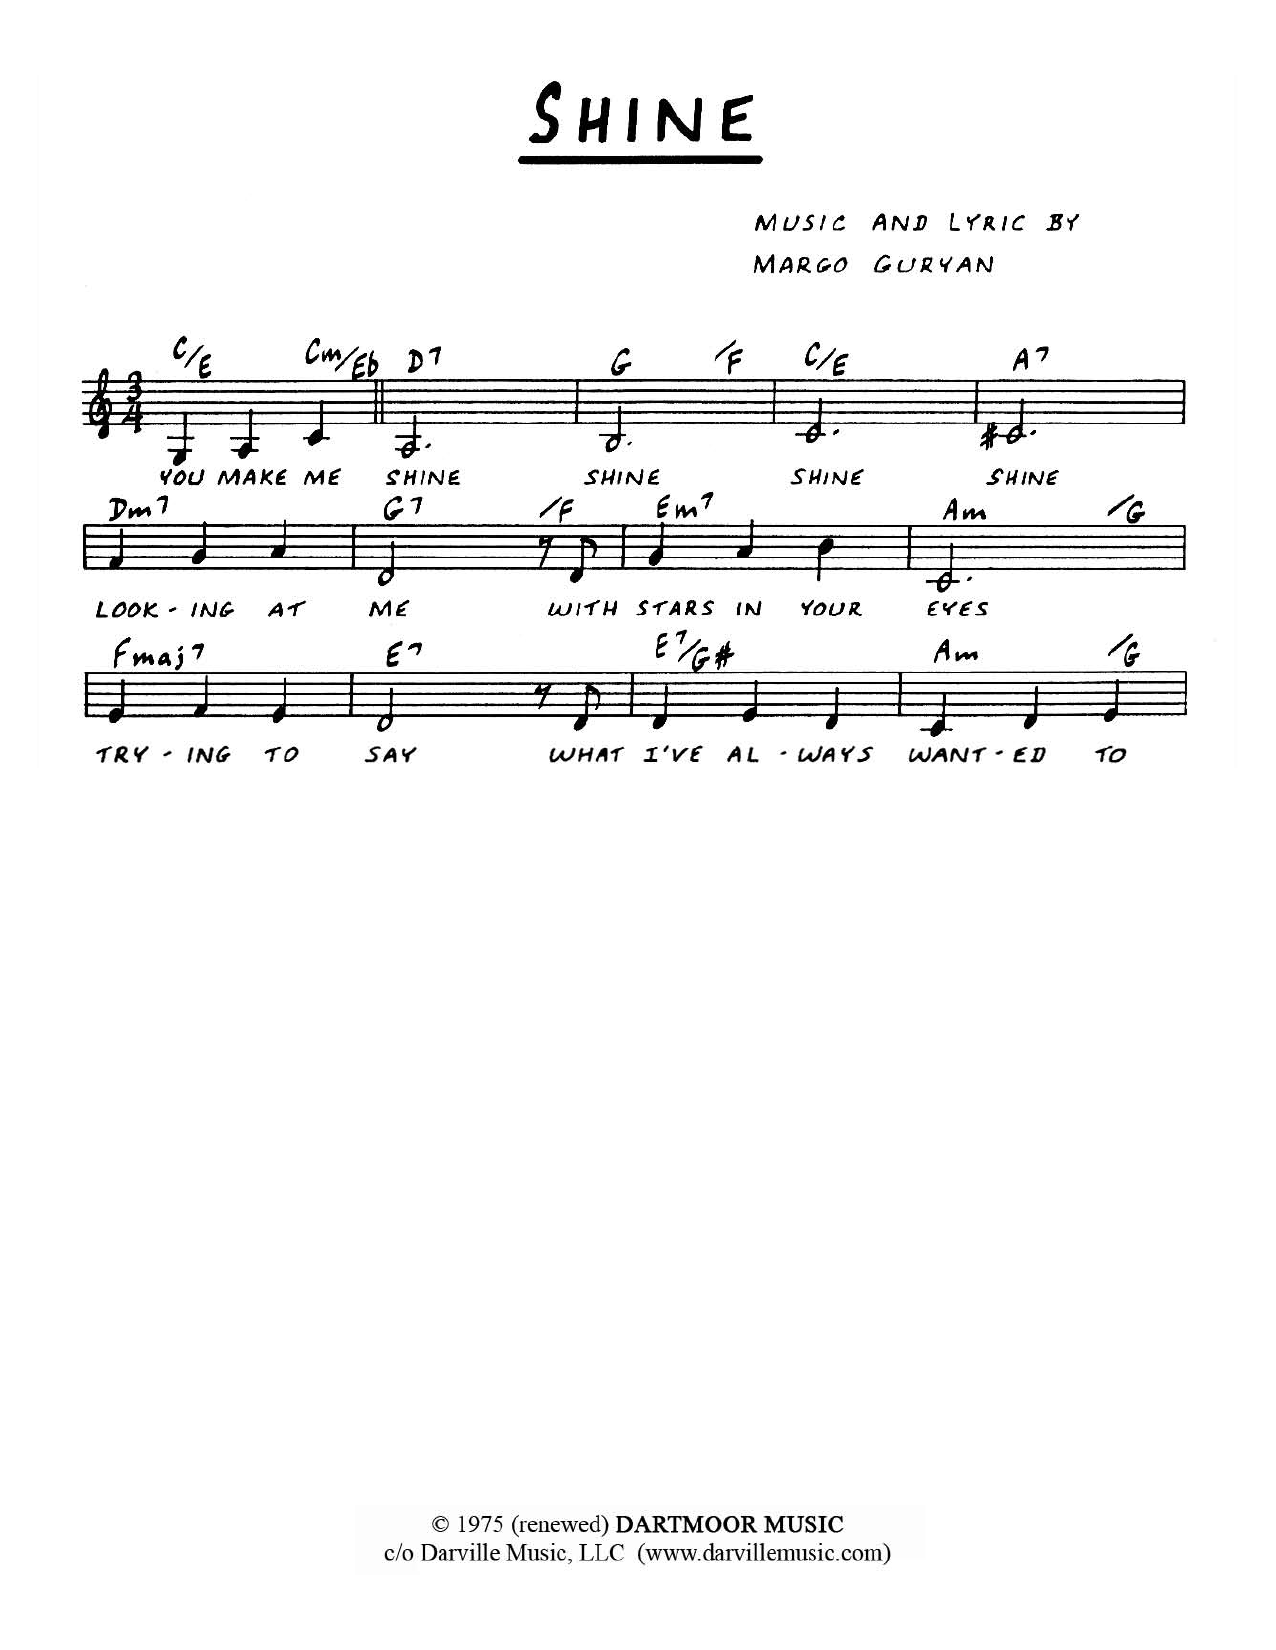 Margo Guryan Shine sheet music notes and chords arranged for Lead Sheet / Fake Book